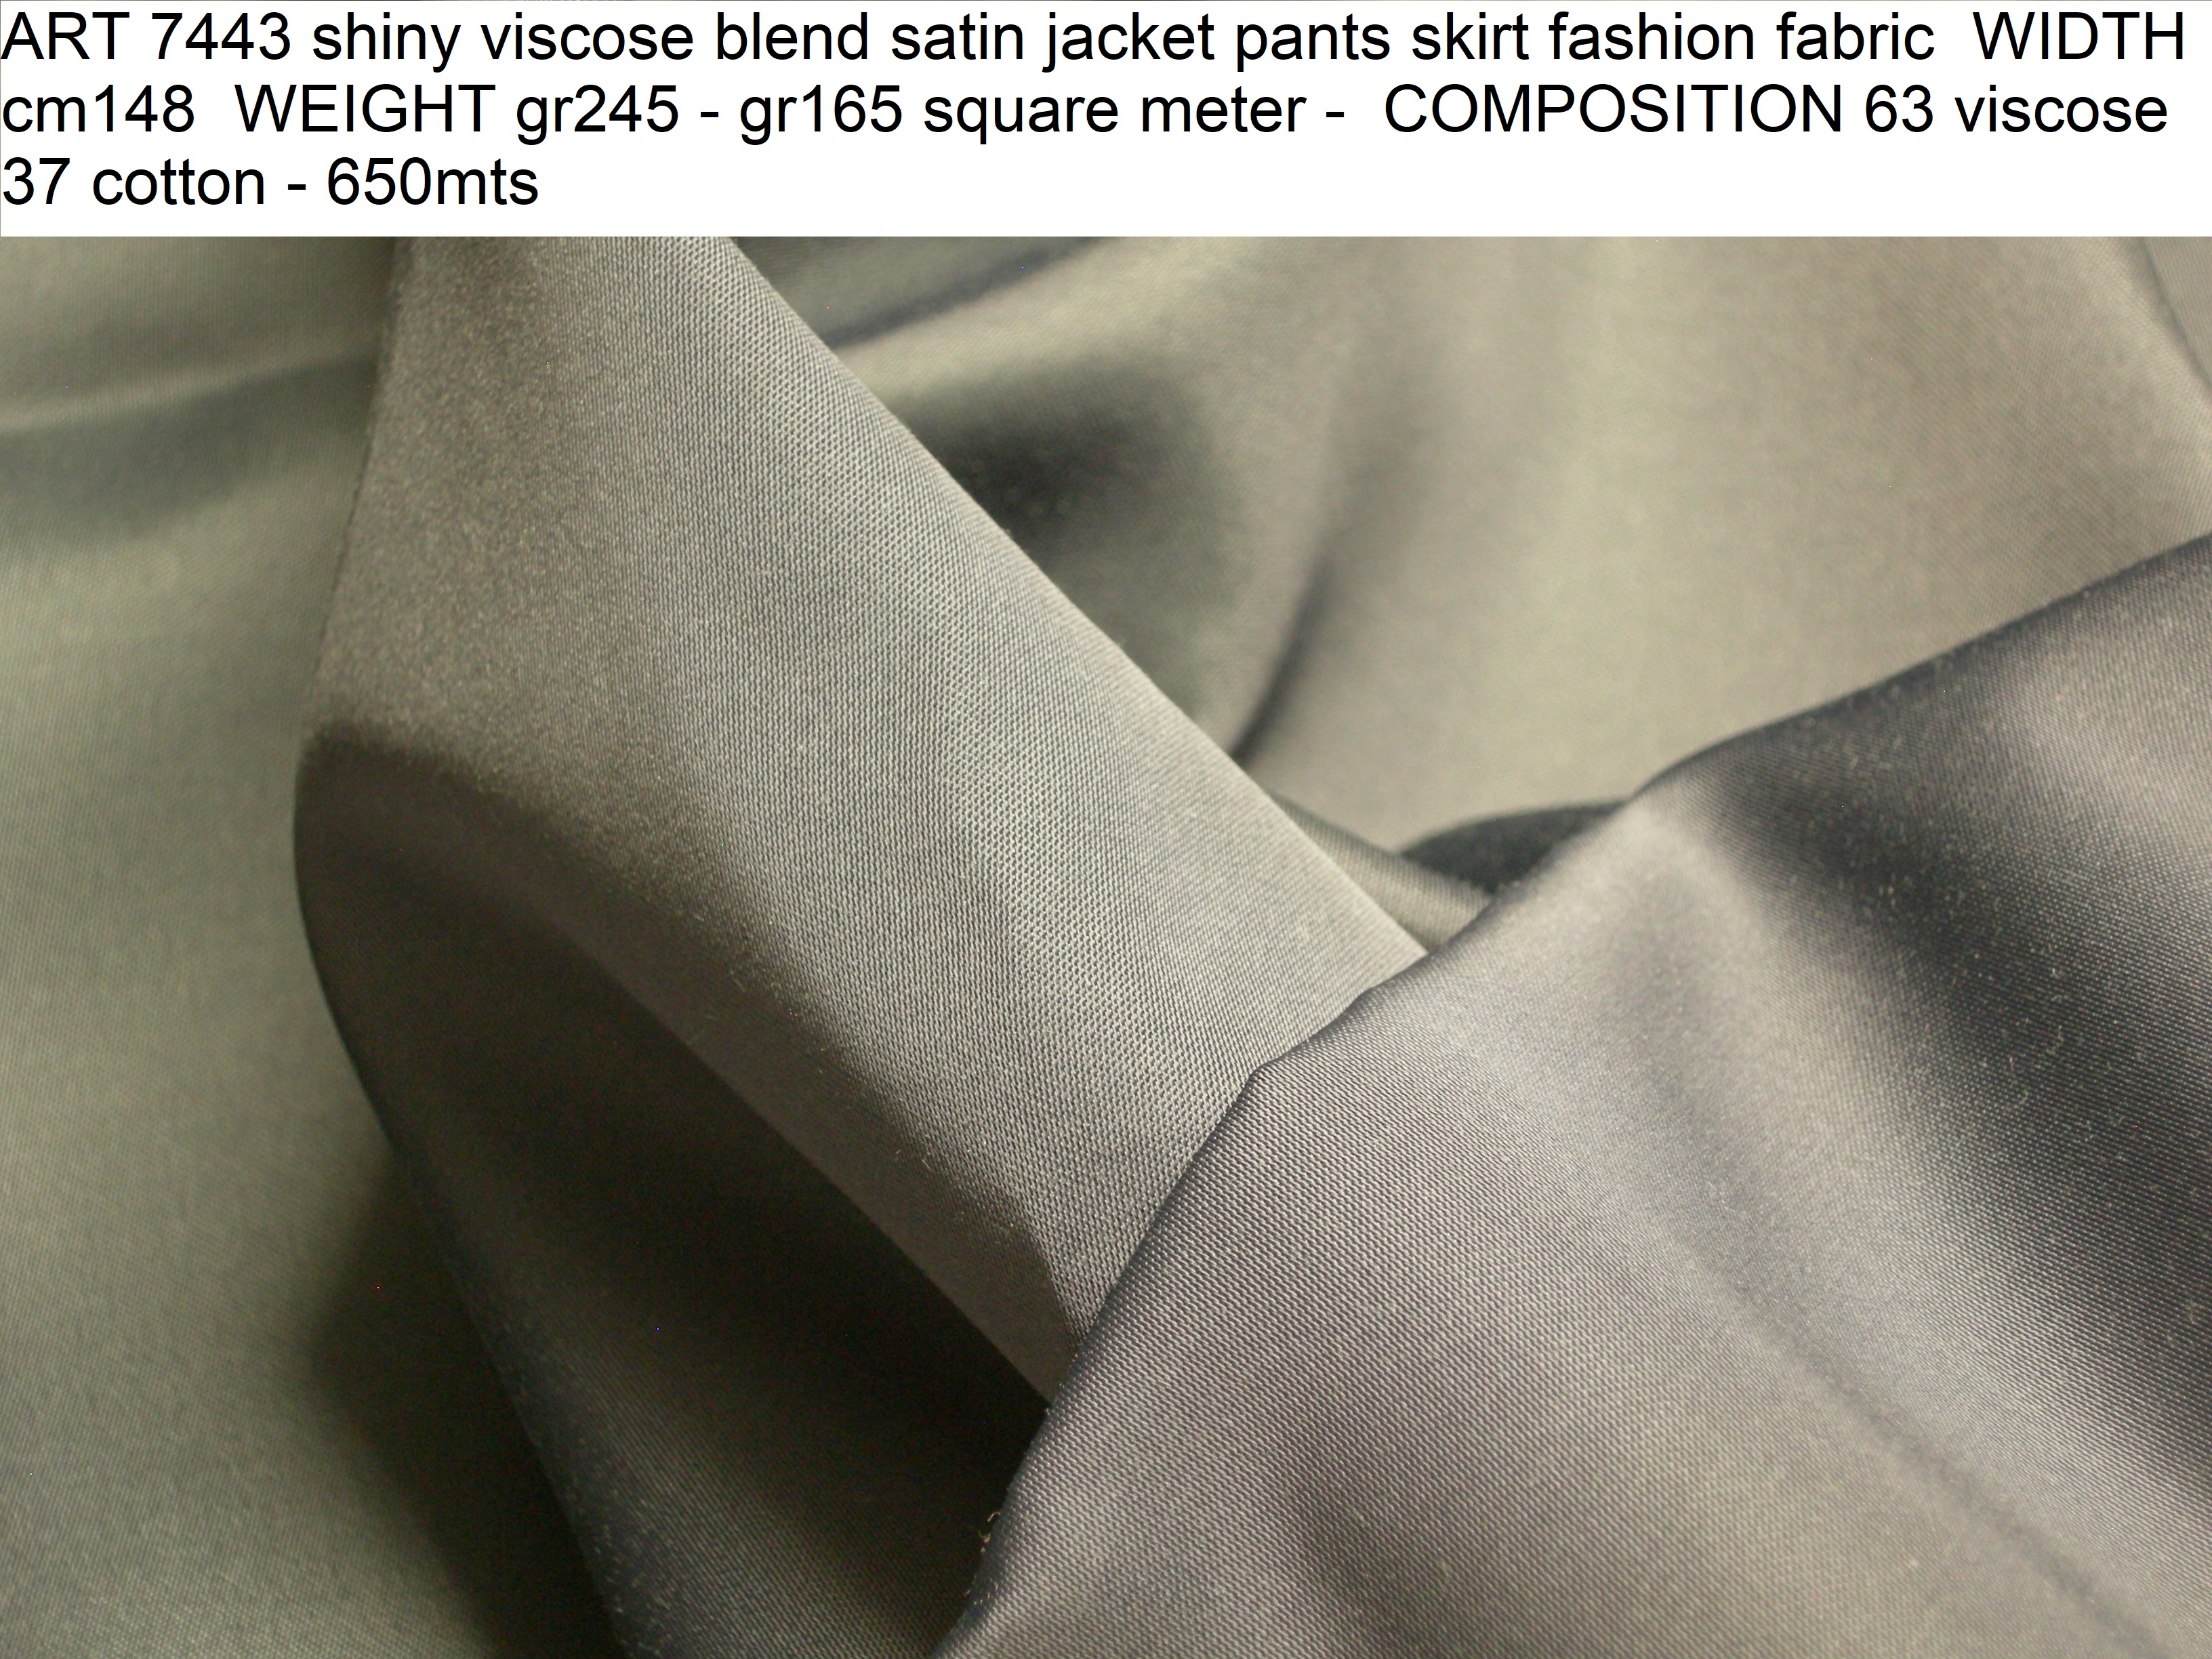 ART 7443 shiny viscose blend satin jacket pants skirt fashion fabric WIDTH cm148 WEIGHT gr245 - gr165 square meter - COMPOSITION 63 viscose 37 cotton - 650mts